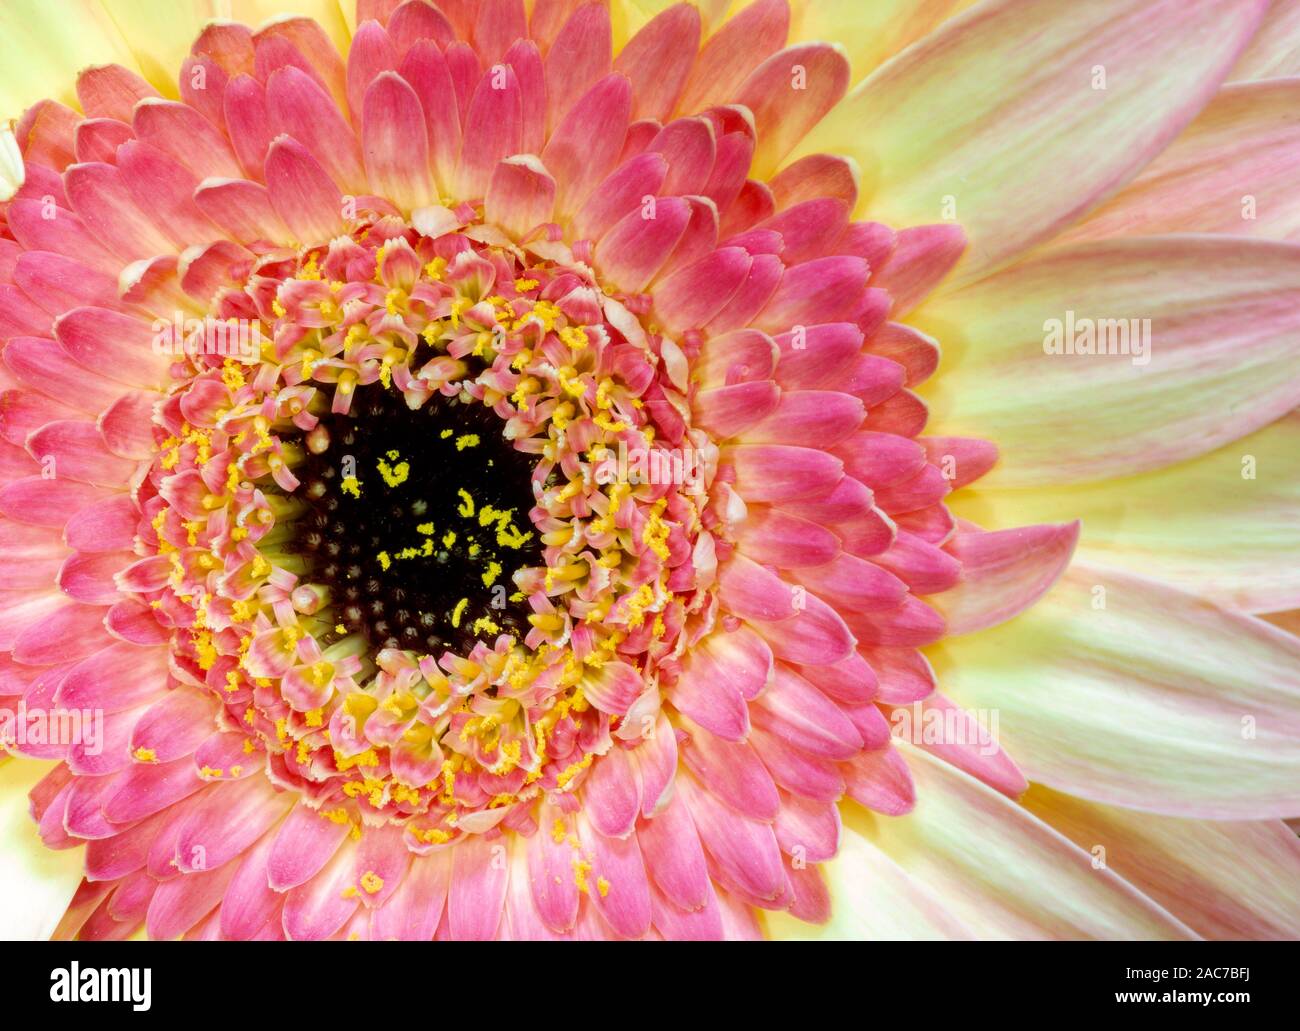 Close up image of beautiful pink and yellow gerbera flower Stock Photo